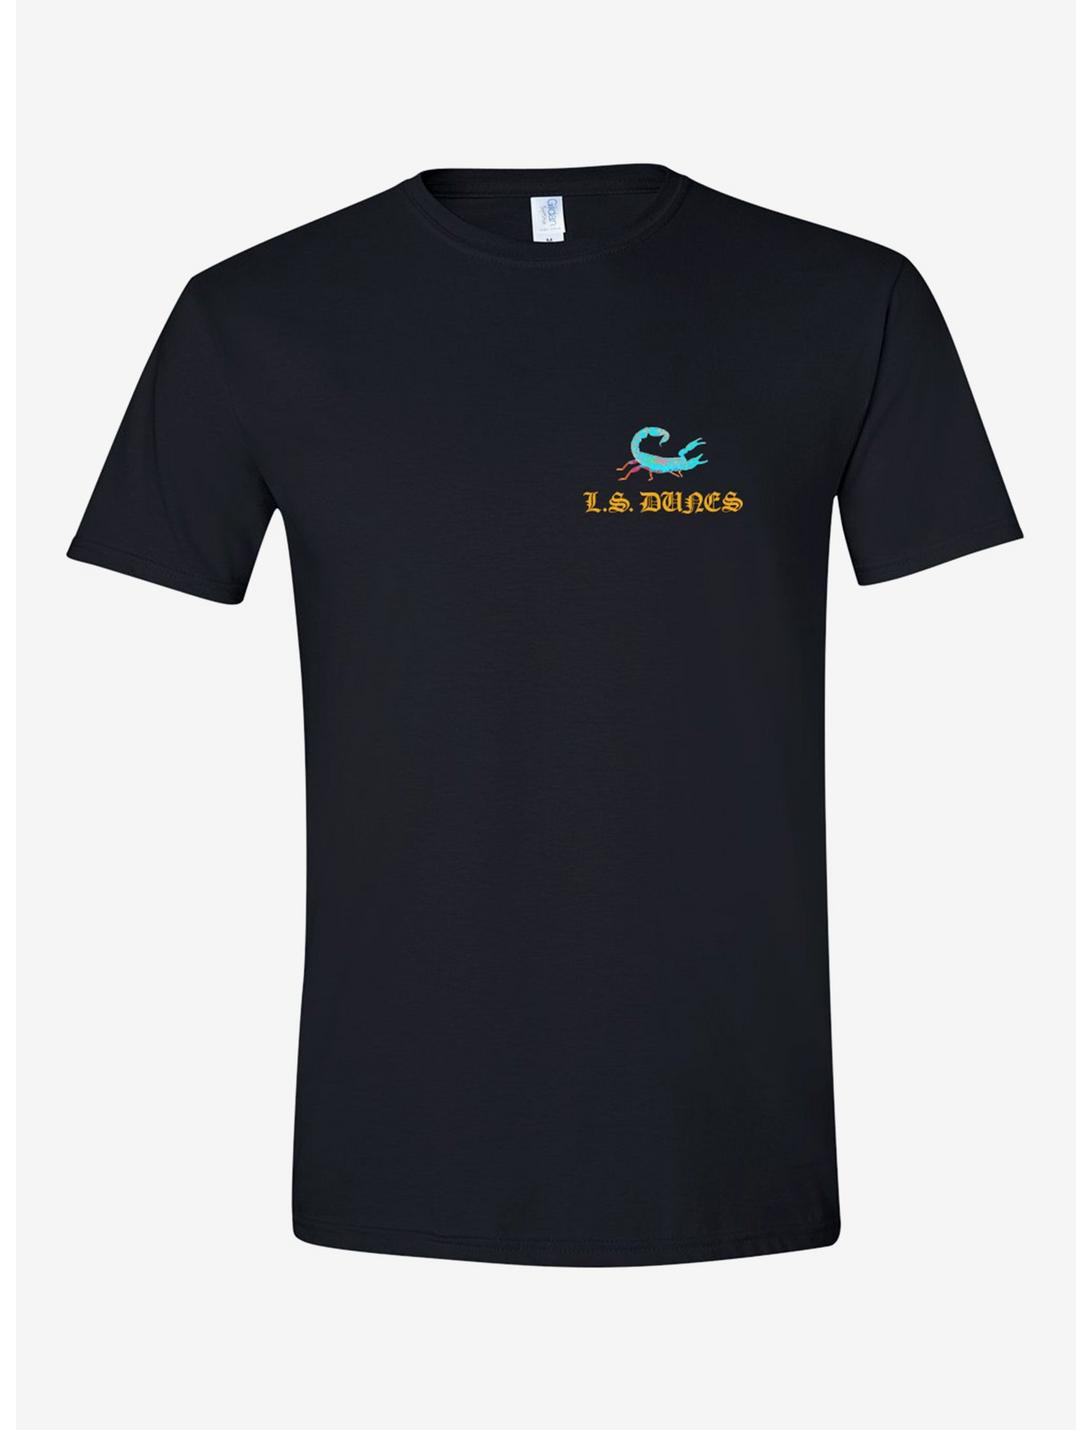 L.S. Dunes Past Lives Scorpion T-Shirt, BLACK, hi-res